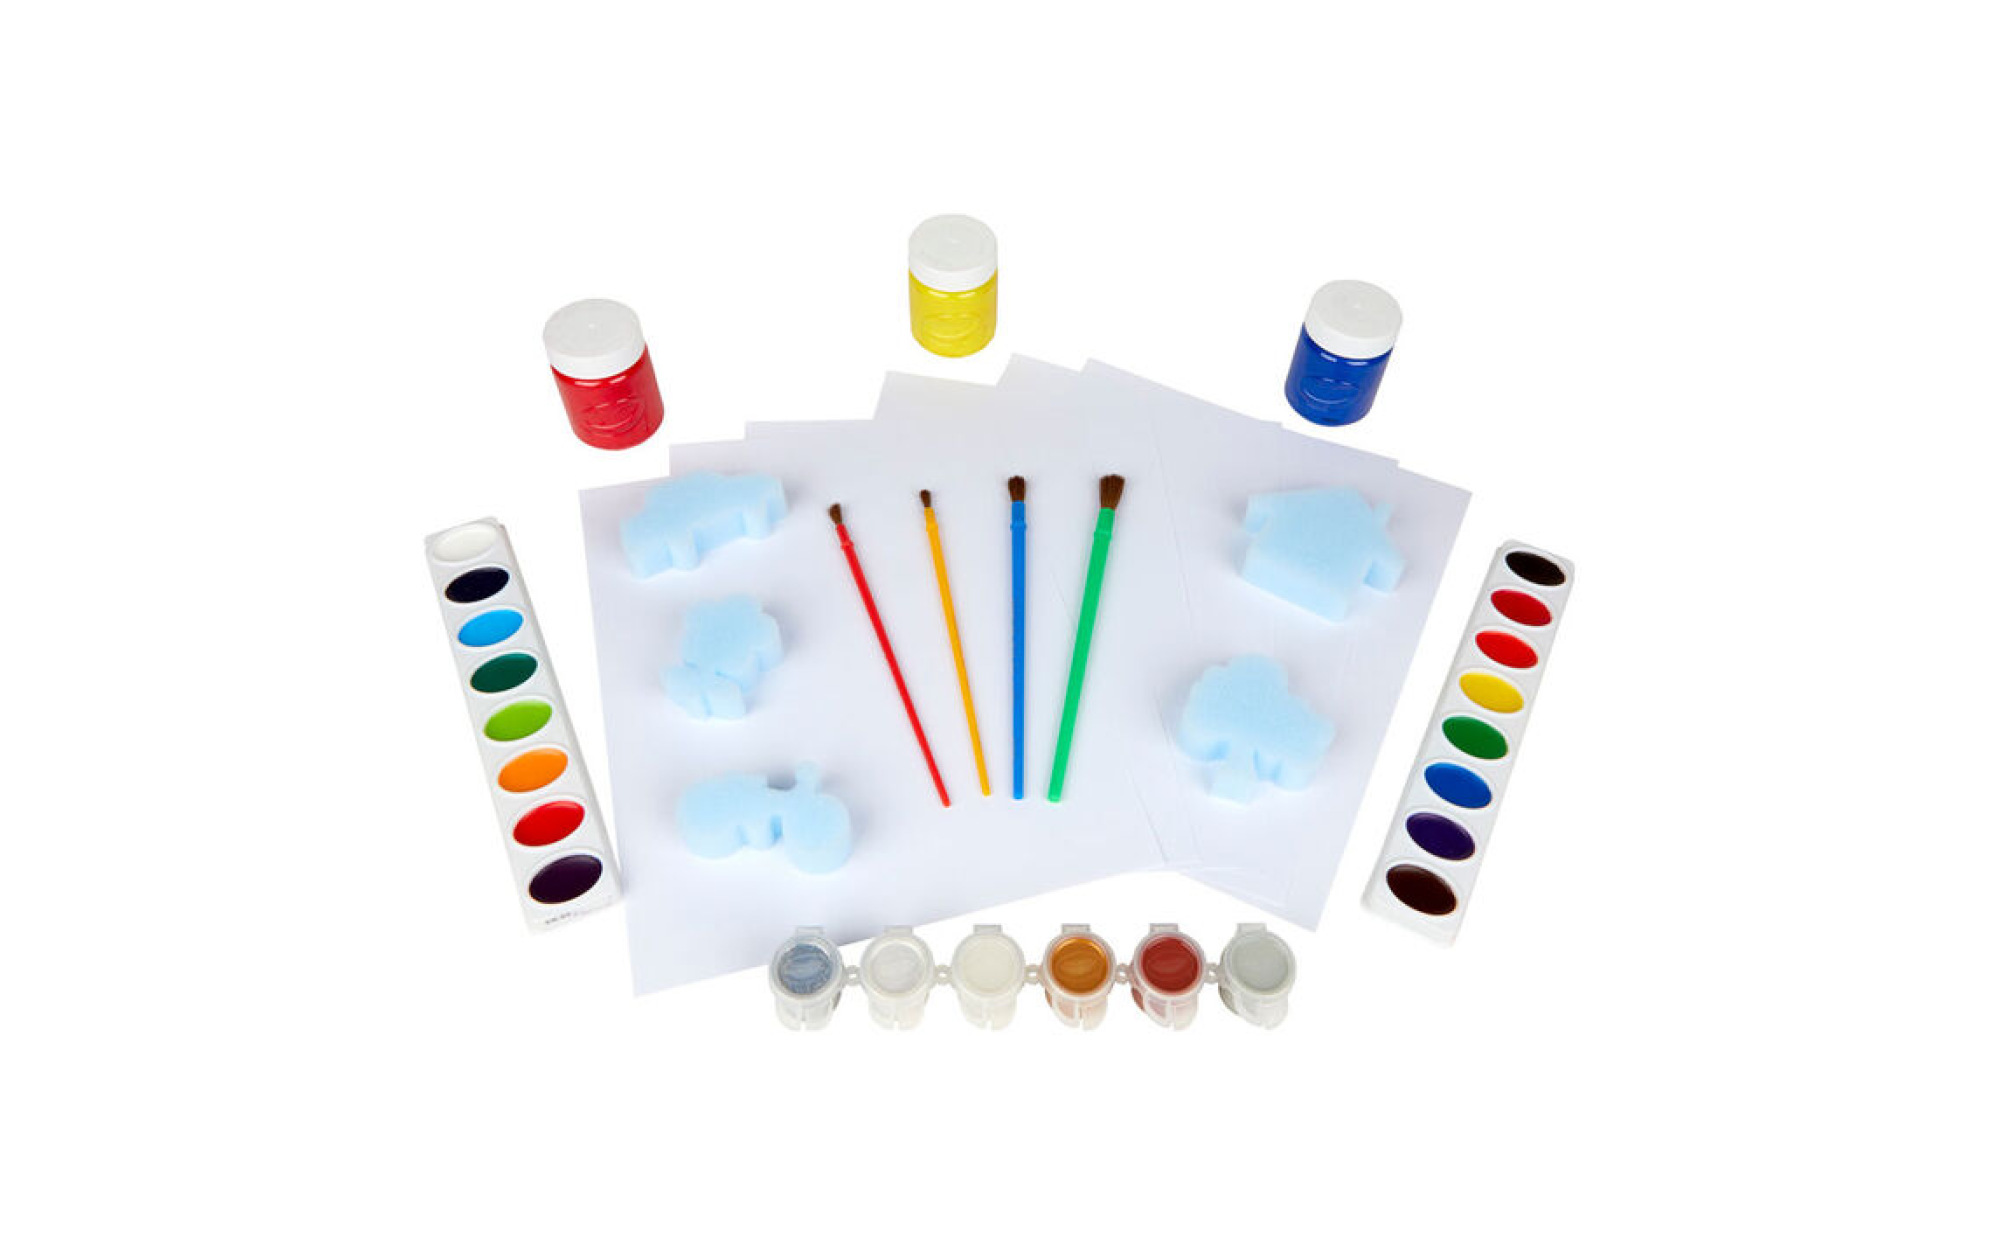 Crayola Washable Watercolors, Paint Set for Kids, 8 Colors